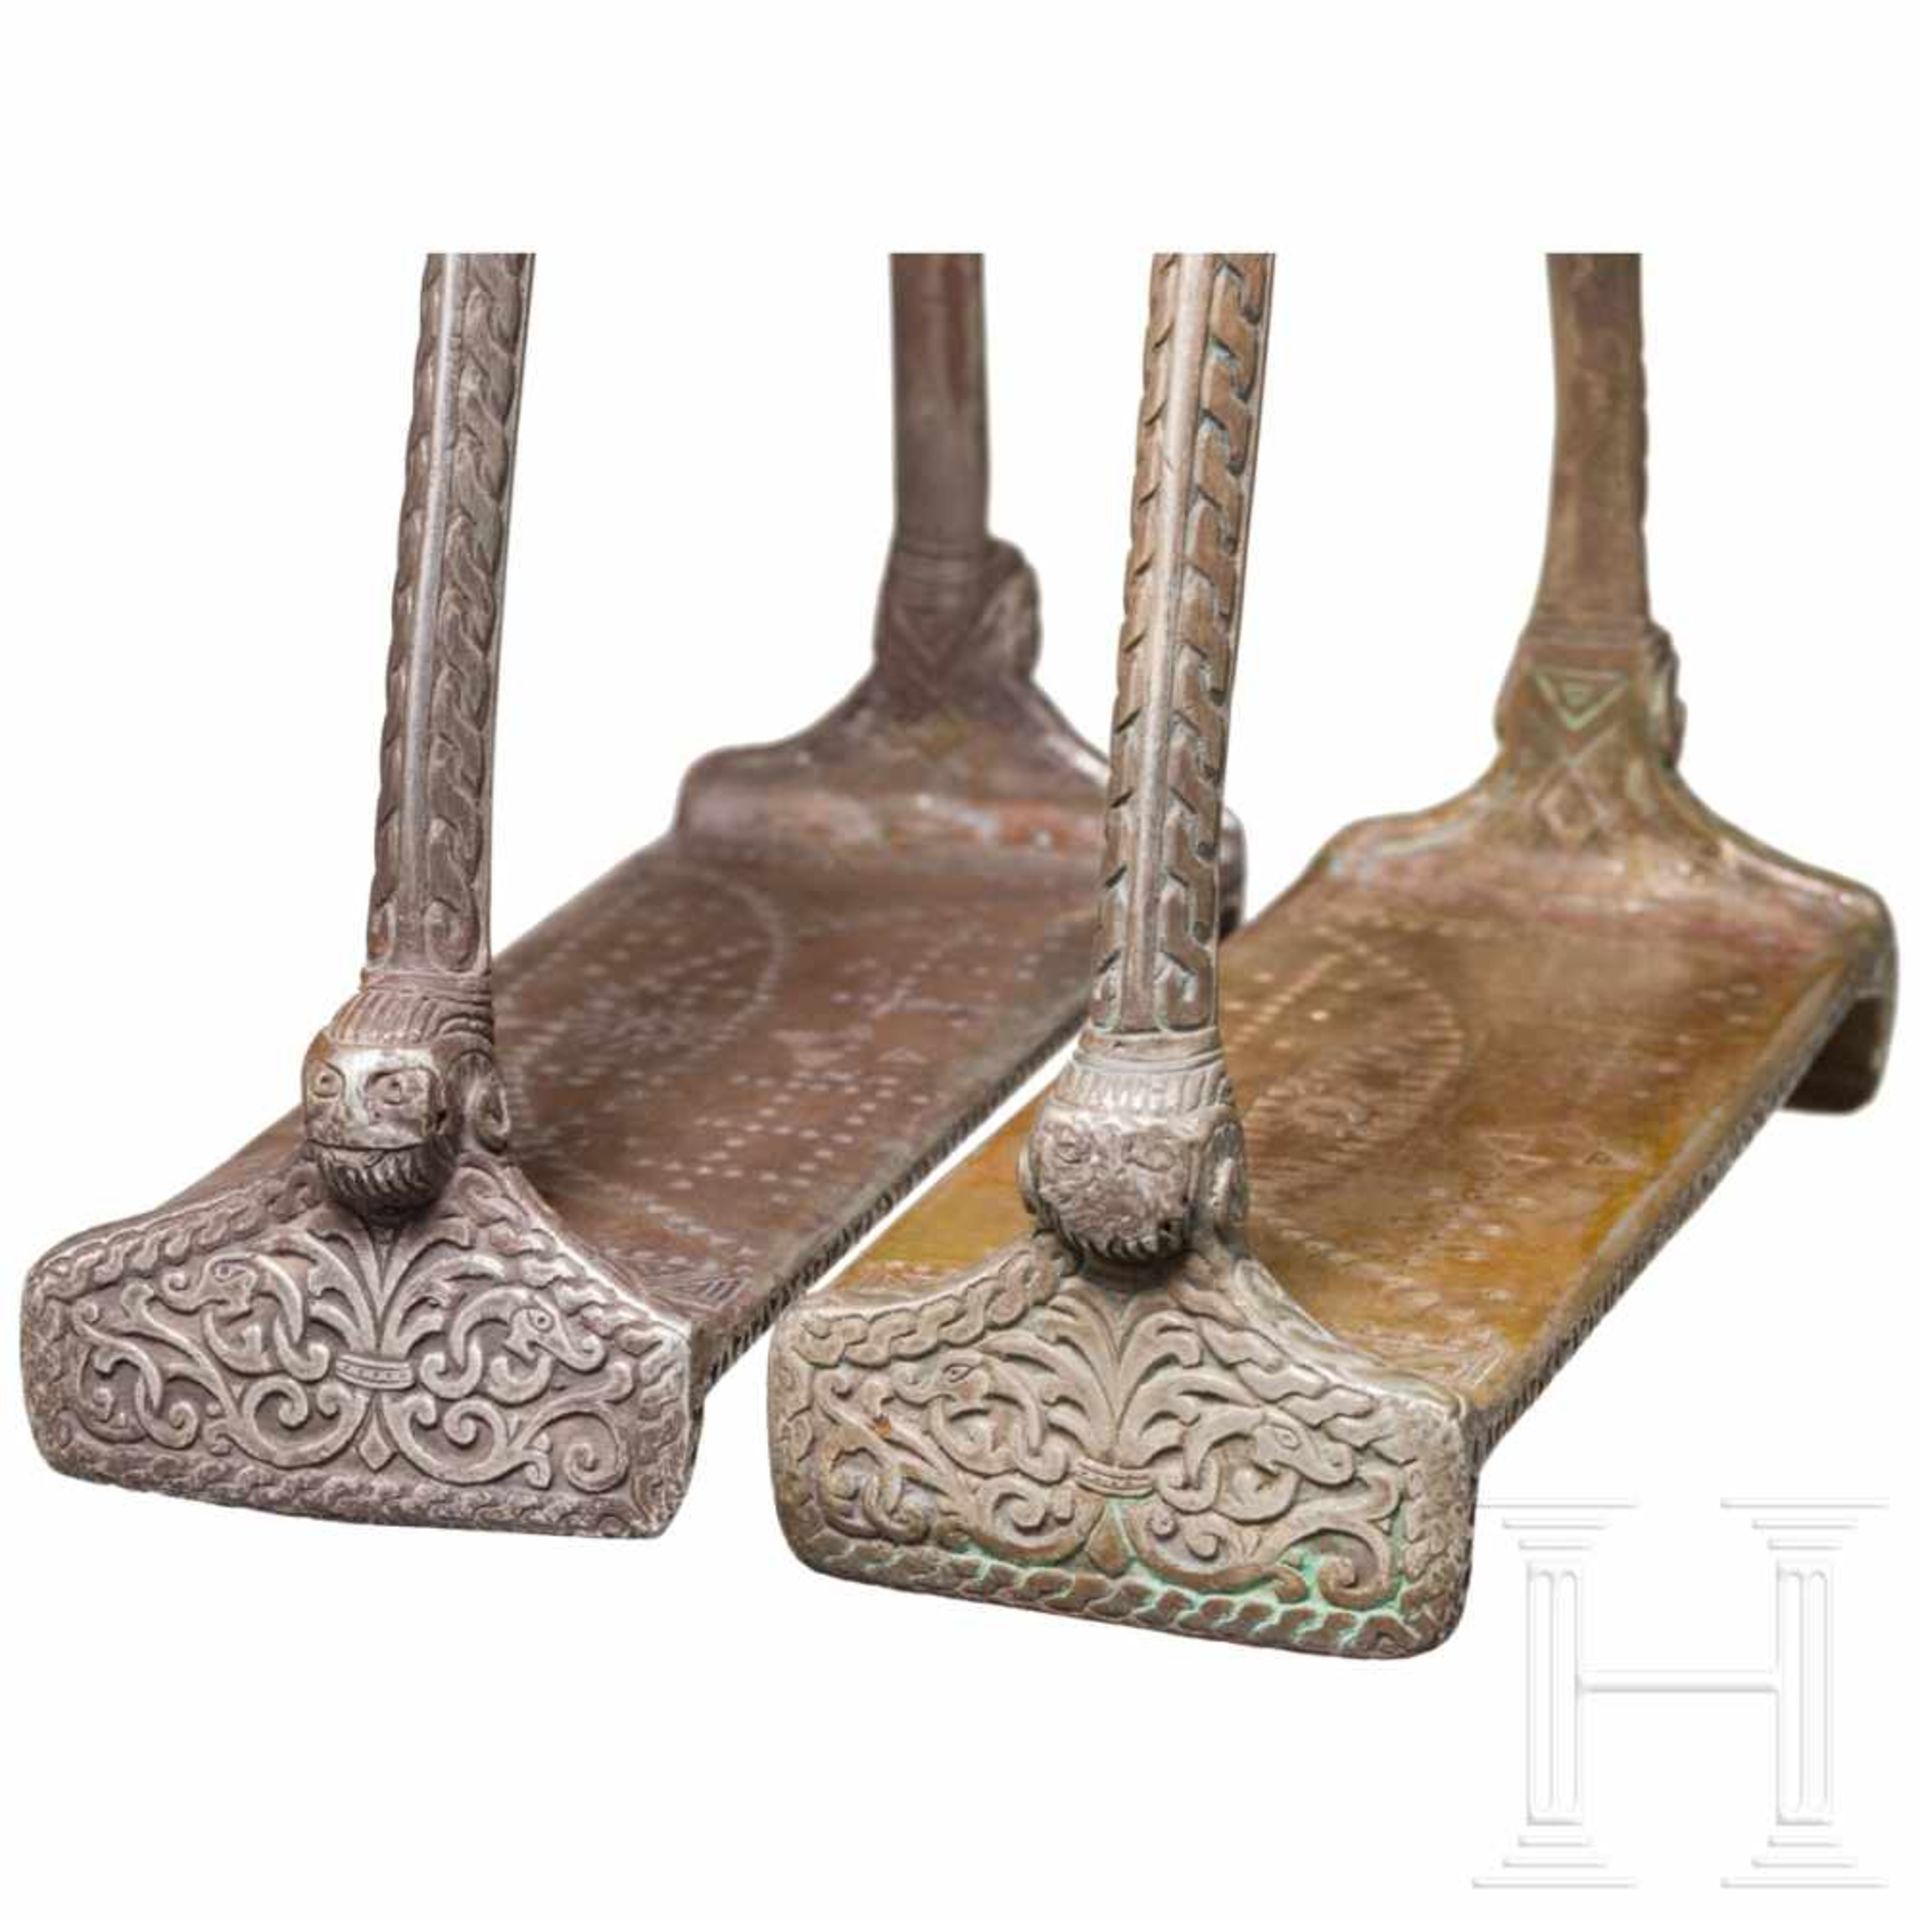 A pair of Northern or Eastern European silver Viking stirrups, circa 11th centuryA pair of high, - Bild 5 aus 7